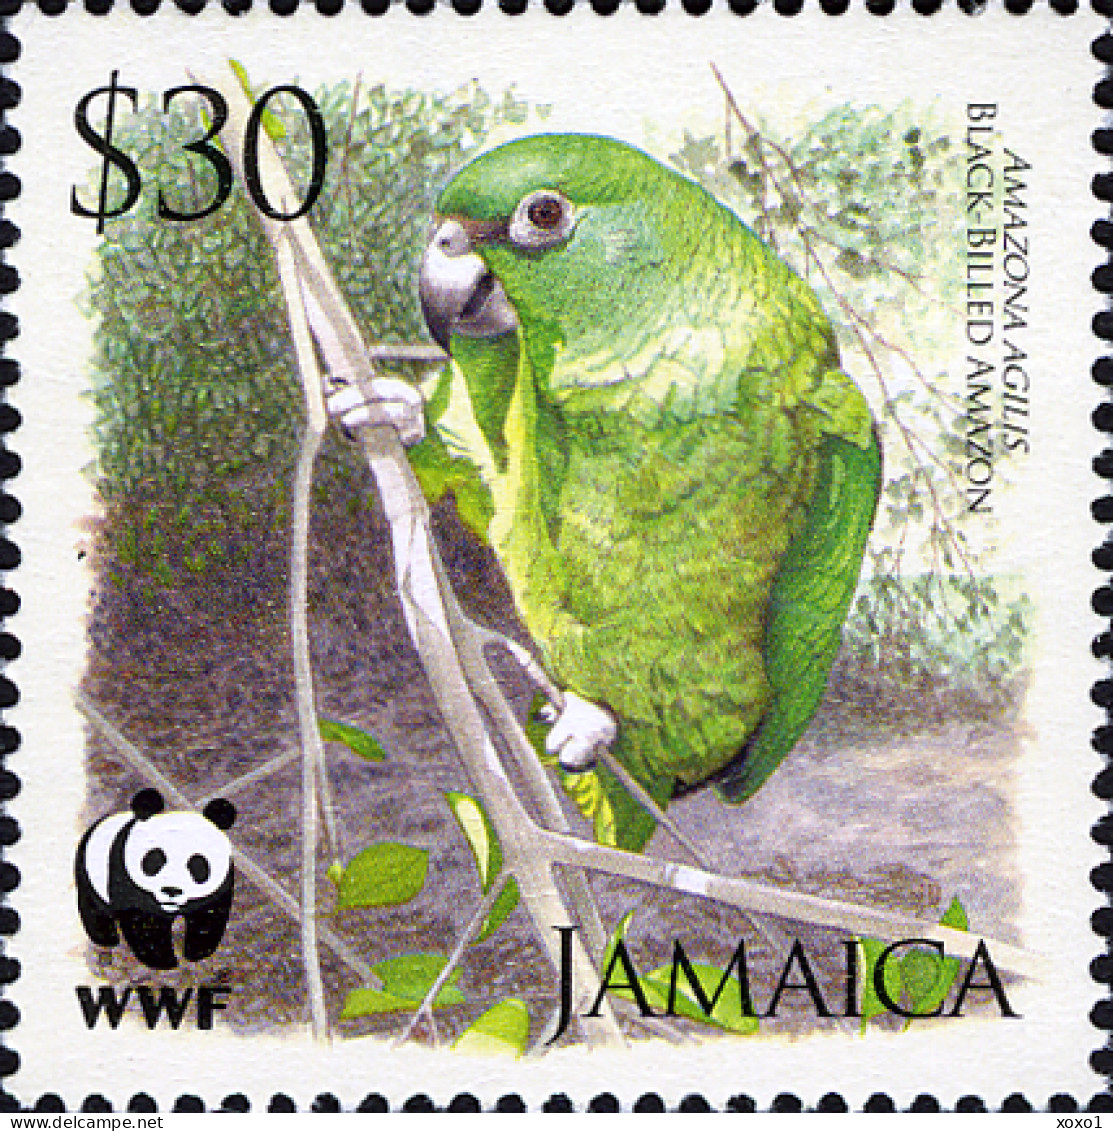 Jamaica 2006 MiNr. 1122 - 1125 Jamaika WWF Birds, Parrots, Black-billed Amazon 4v MNH** 3.20 € - Parrots